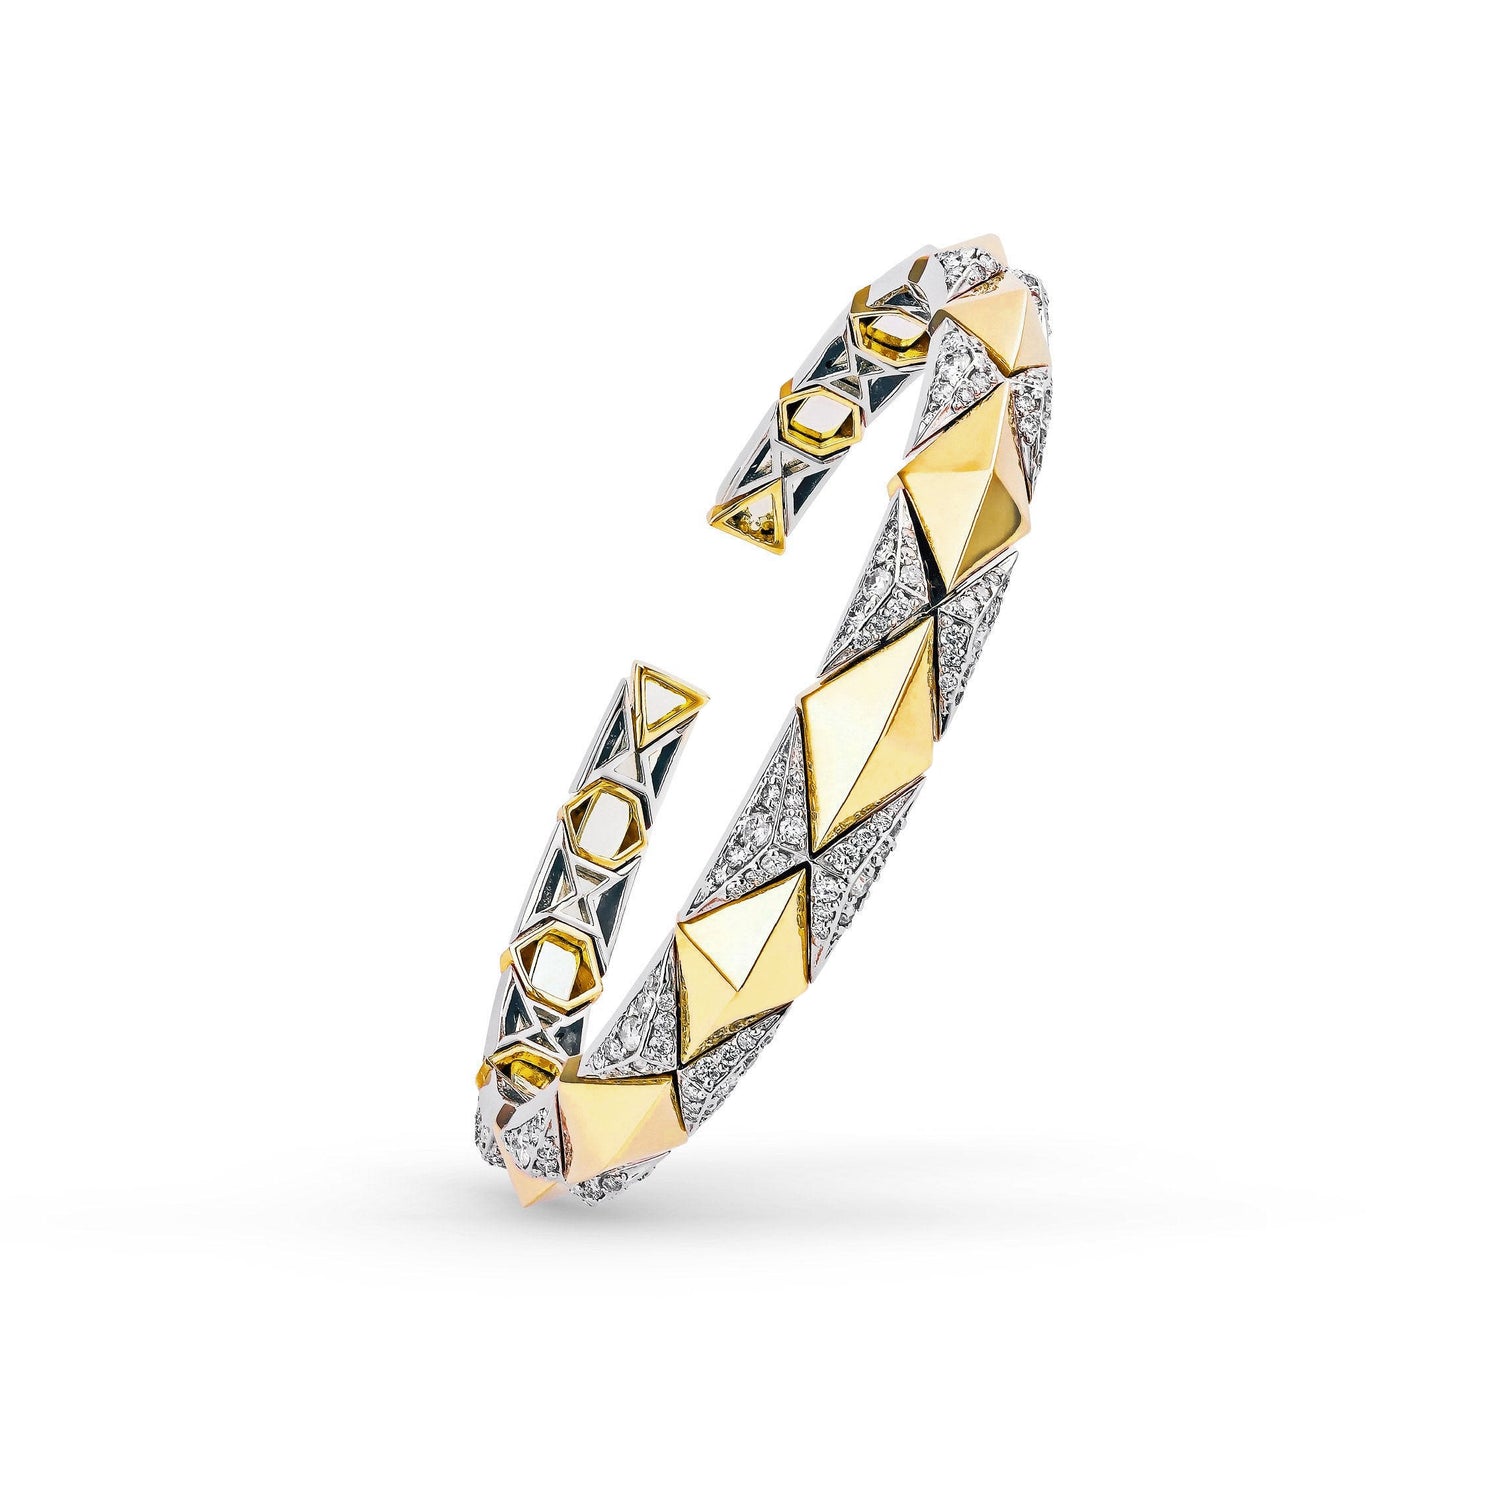 Okre by Yessayan - Pyramid Yellow Gold & Diamond Bracelet | jewellery store | Best website for jewelry